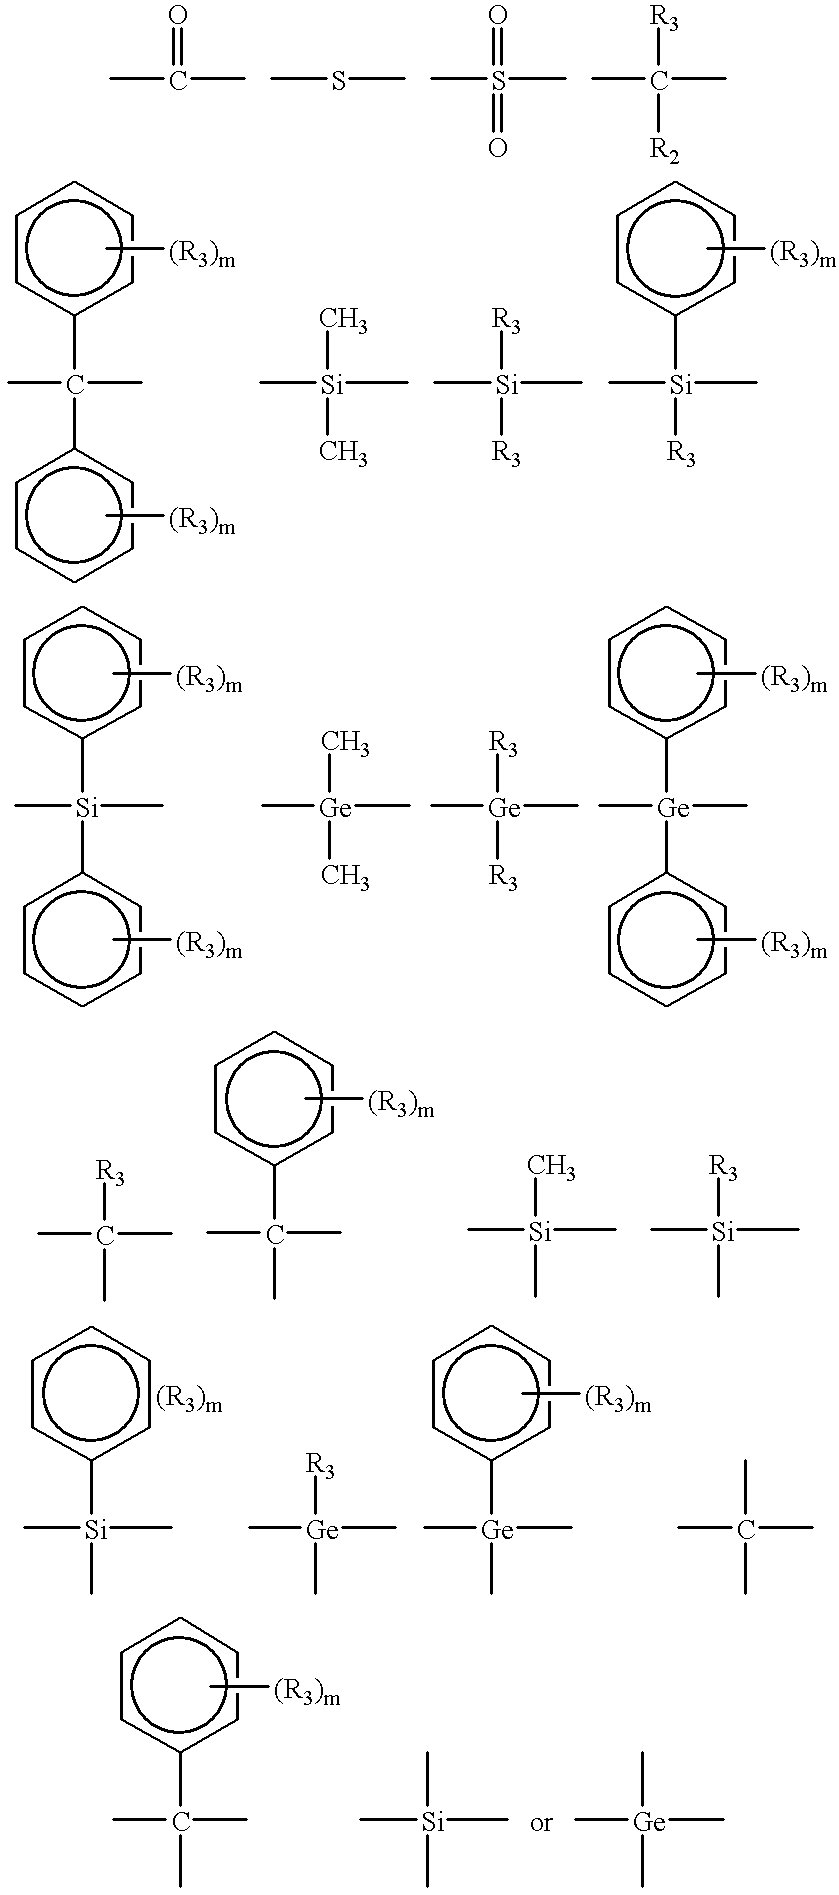 Cationic ring-opening polymerization of benzoxazines